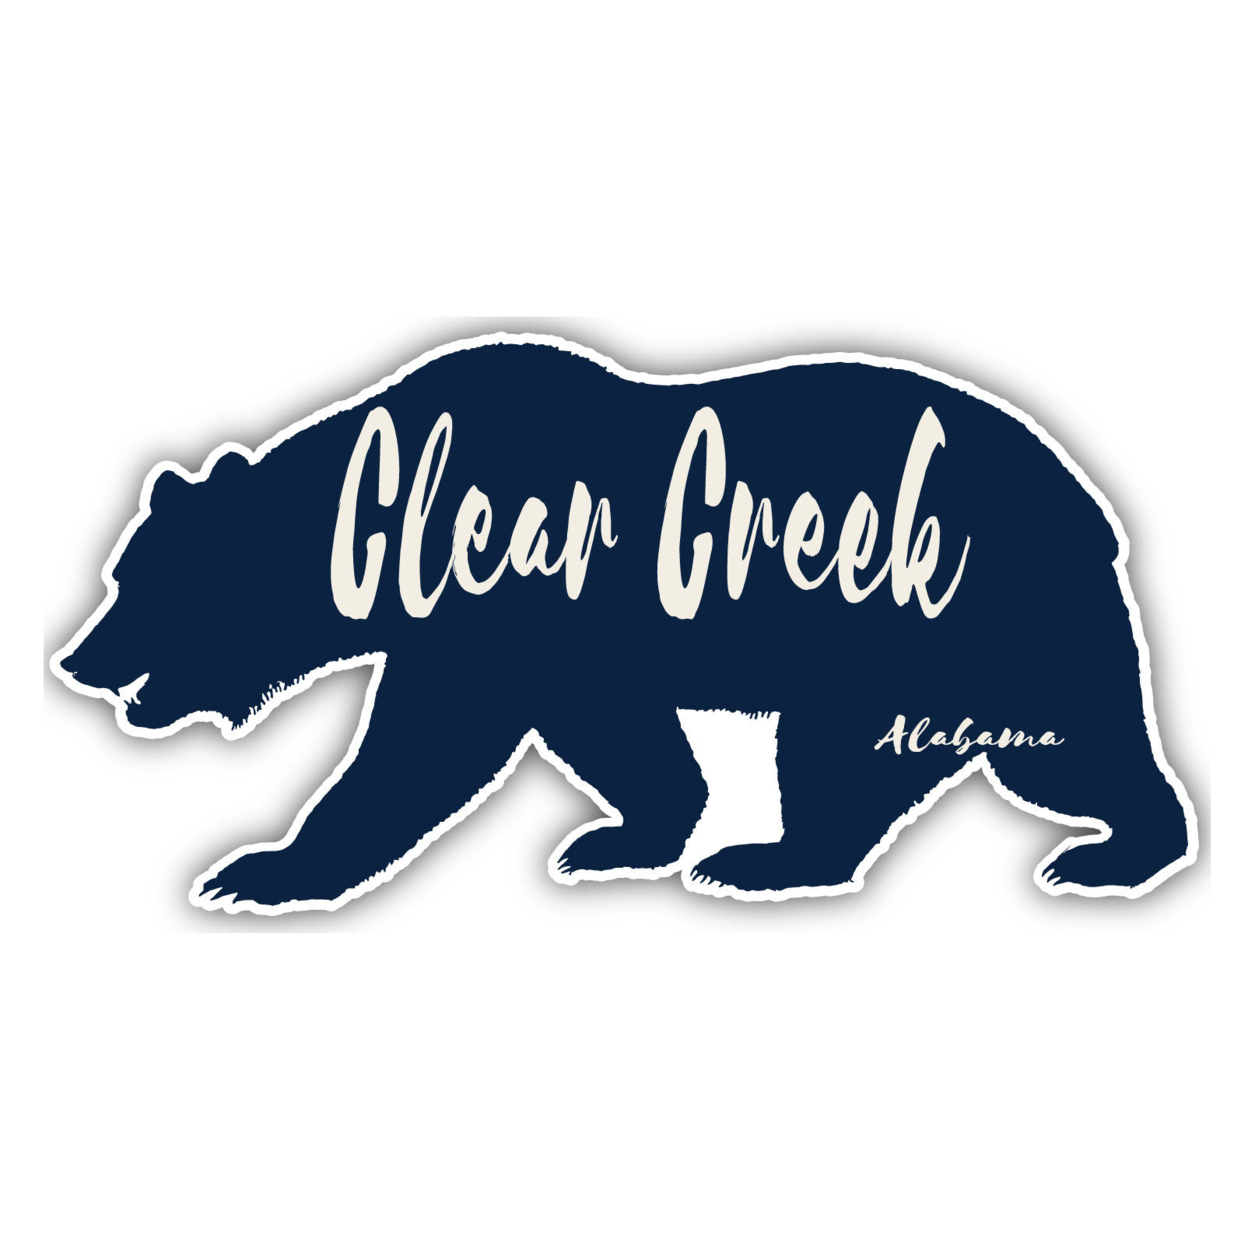 Clear Creek Alabama Souvenir Decorative Stickers (Choose Theme And Size) - Single Unit, 12-Inch, Tent